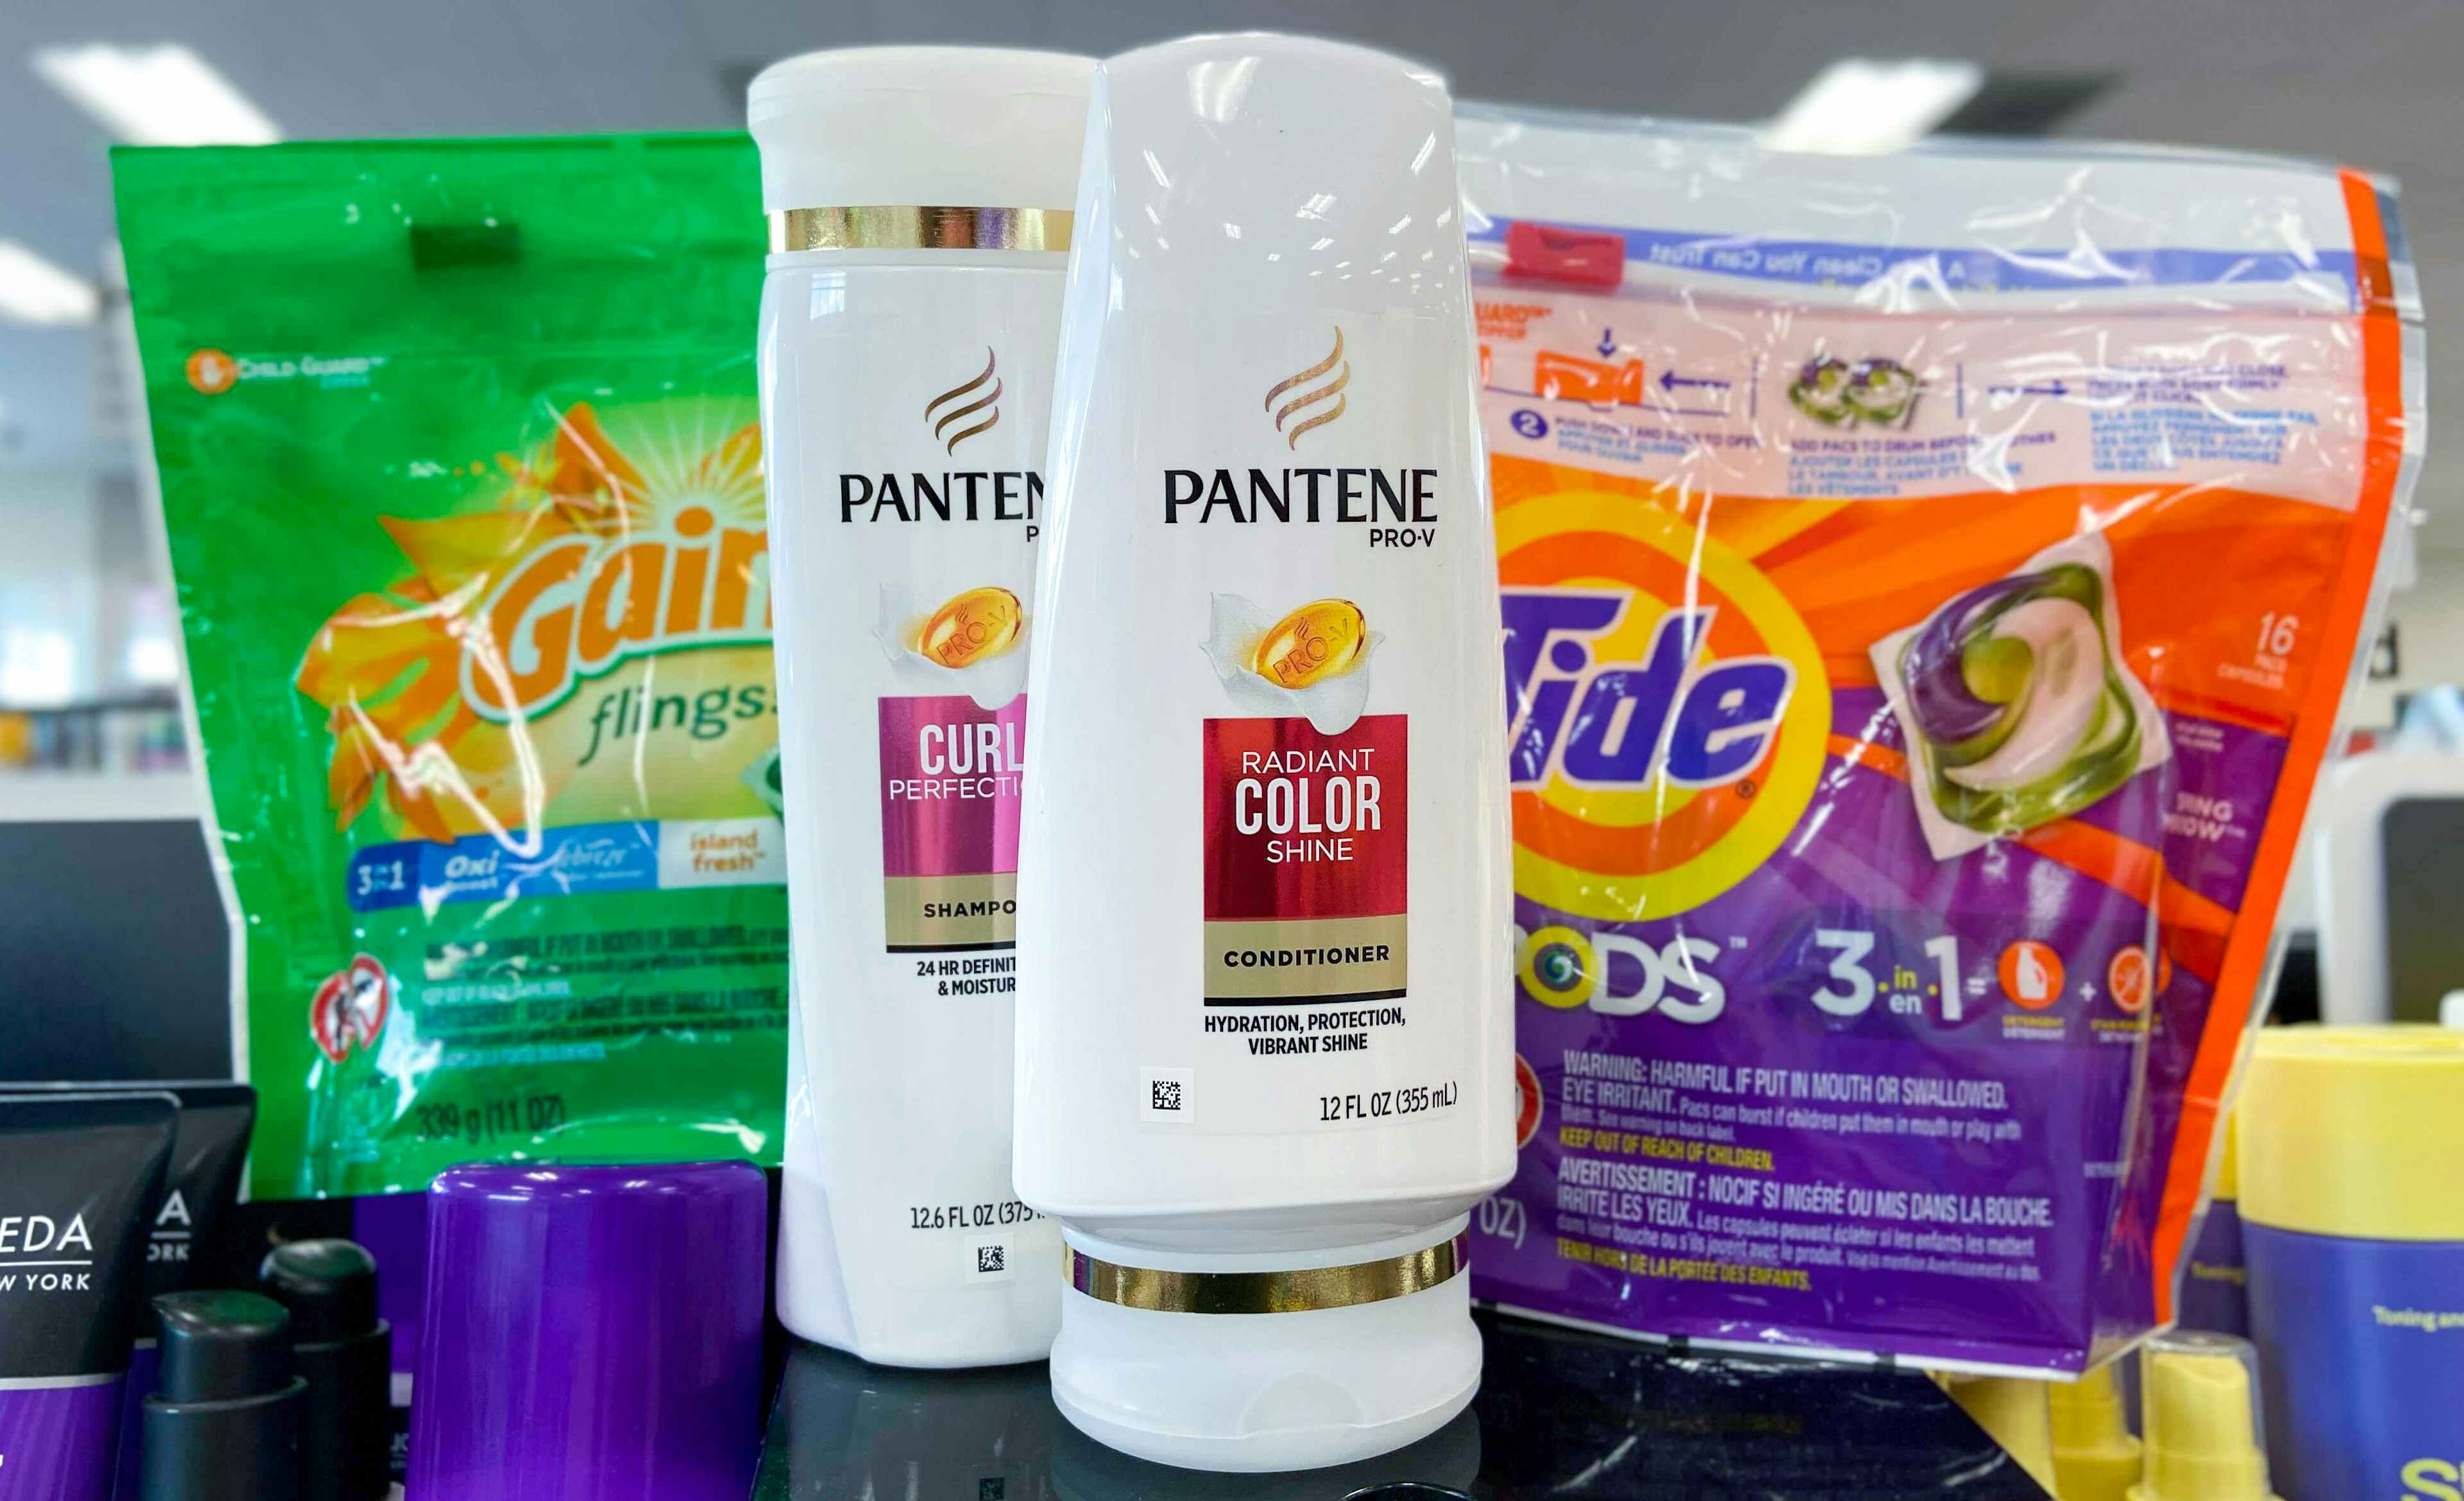 cvs-tide-gain-laundry-detergent-pantene-hair-care-sale-promotion-rebate-em-july-2021